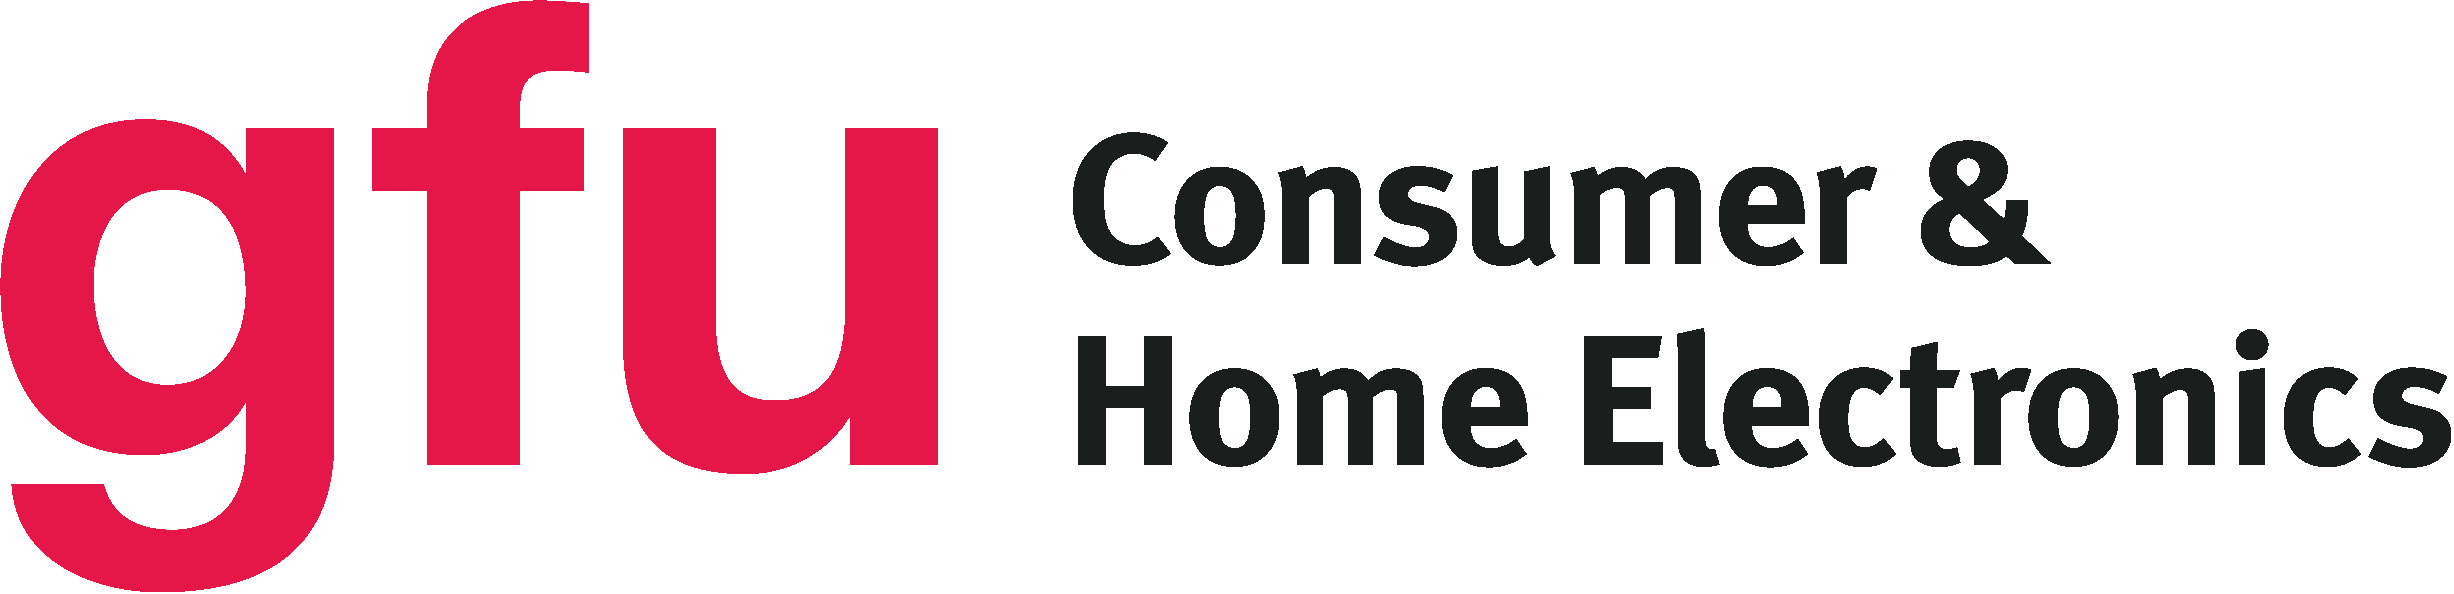 gfu Consume & Home Electronic Logo